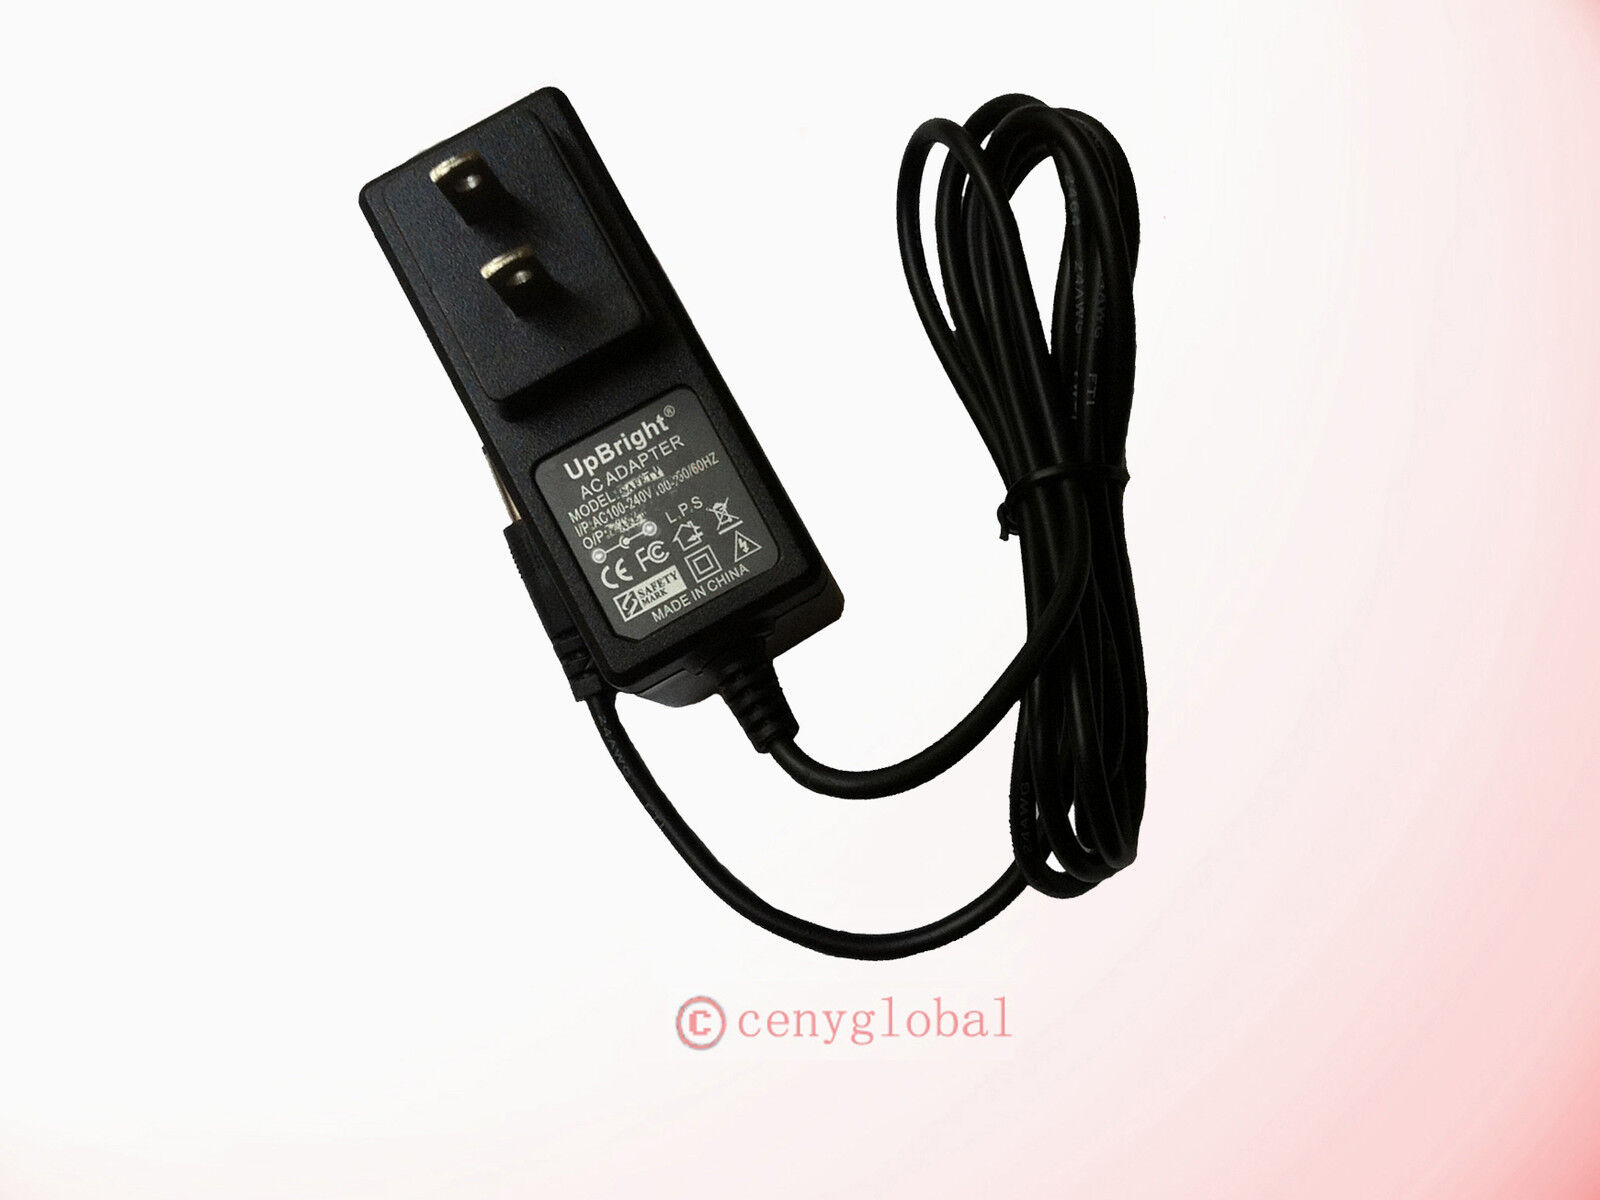 AC Adapter For Panasonic Business Telephones Pslp1322 U Power Supply Fits TVA50